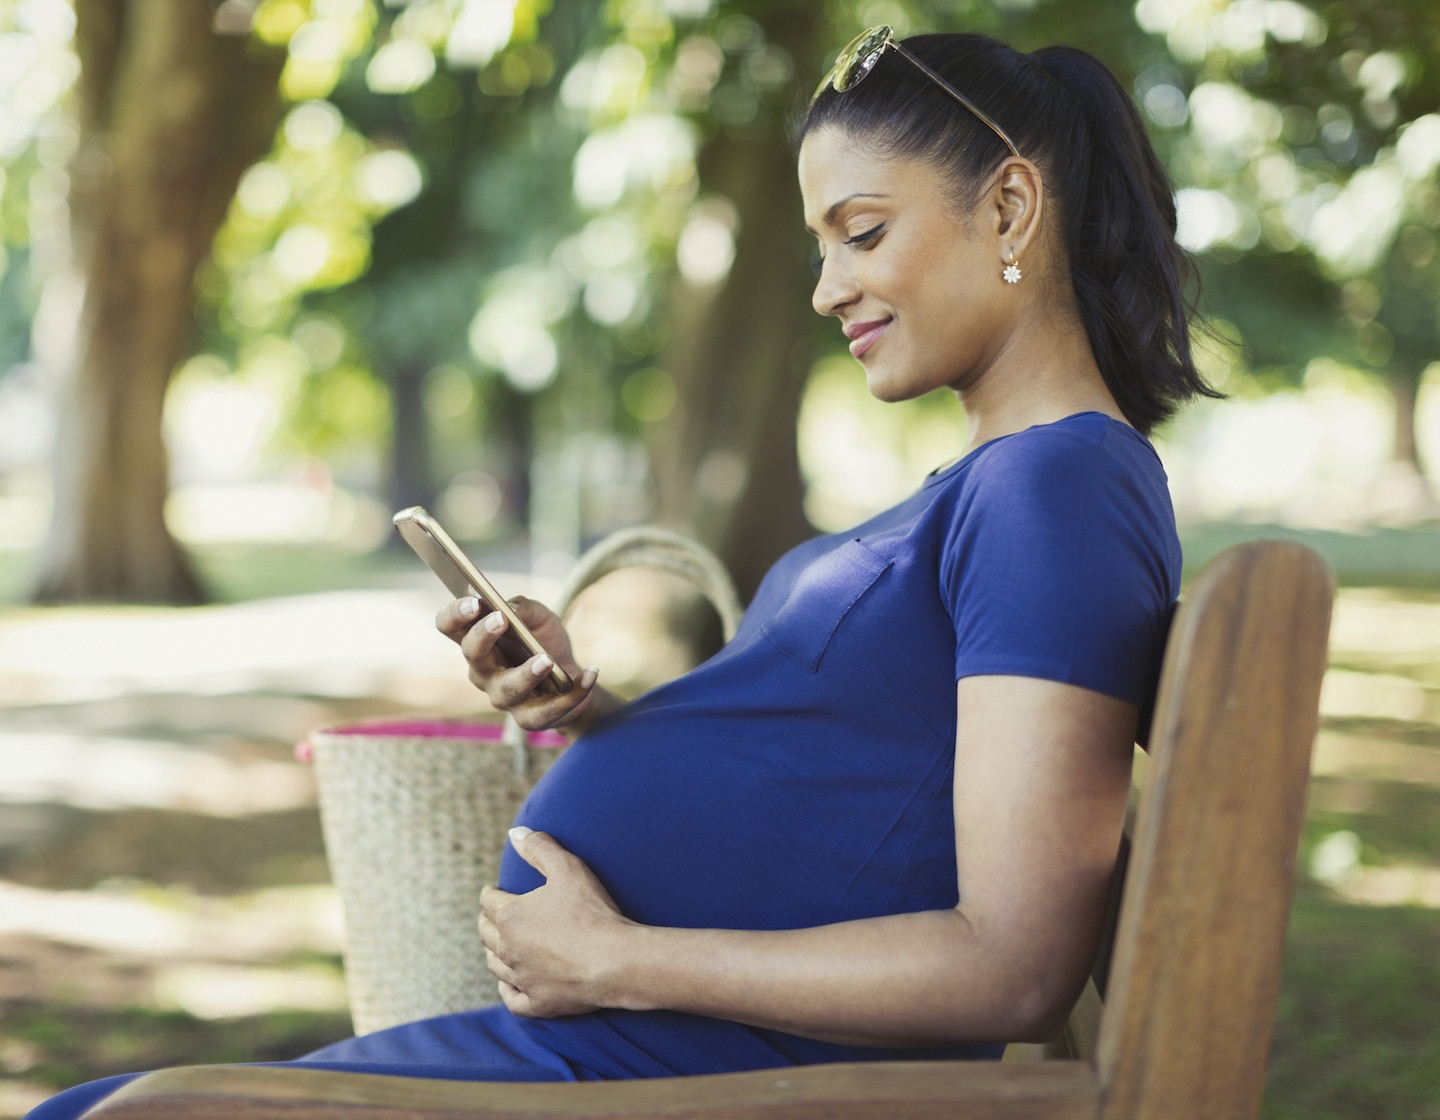 pregnancy apps pregnant woman phone